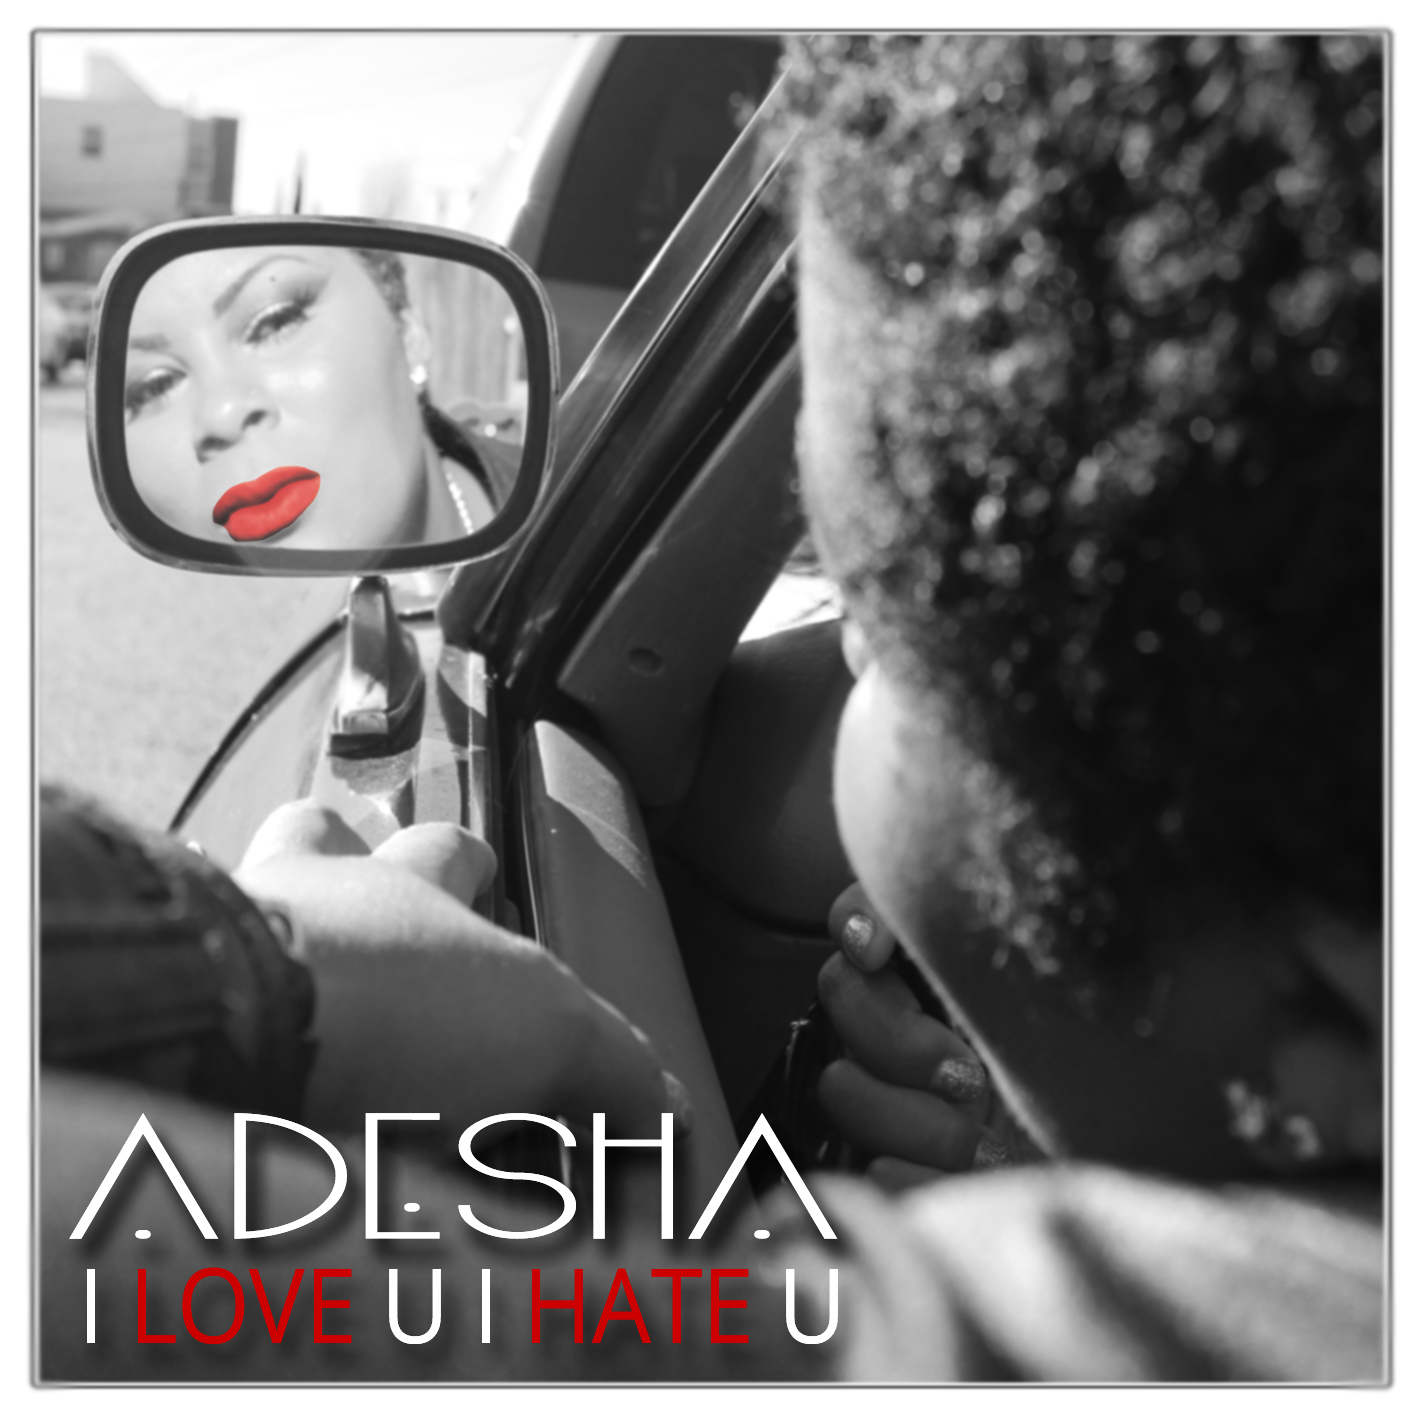 New Artist: Adesha – “I LOVE YOU I HATE YOU”